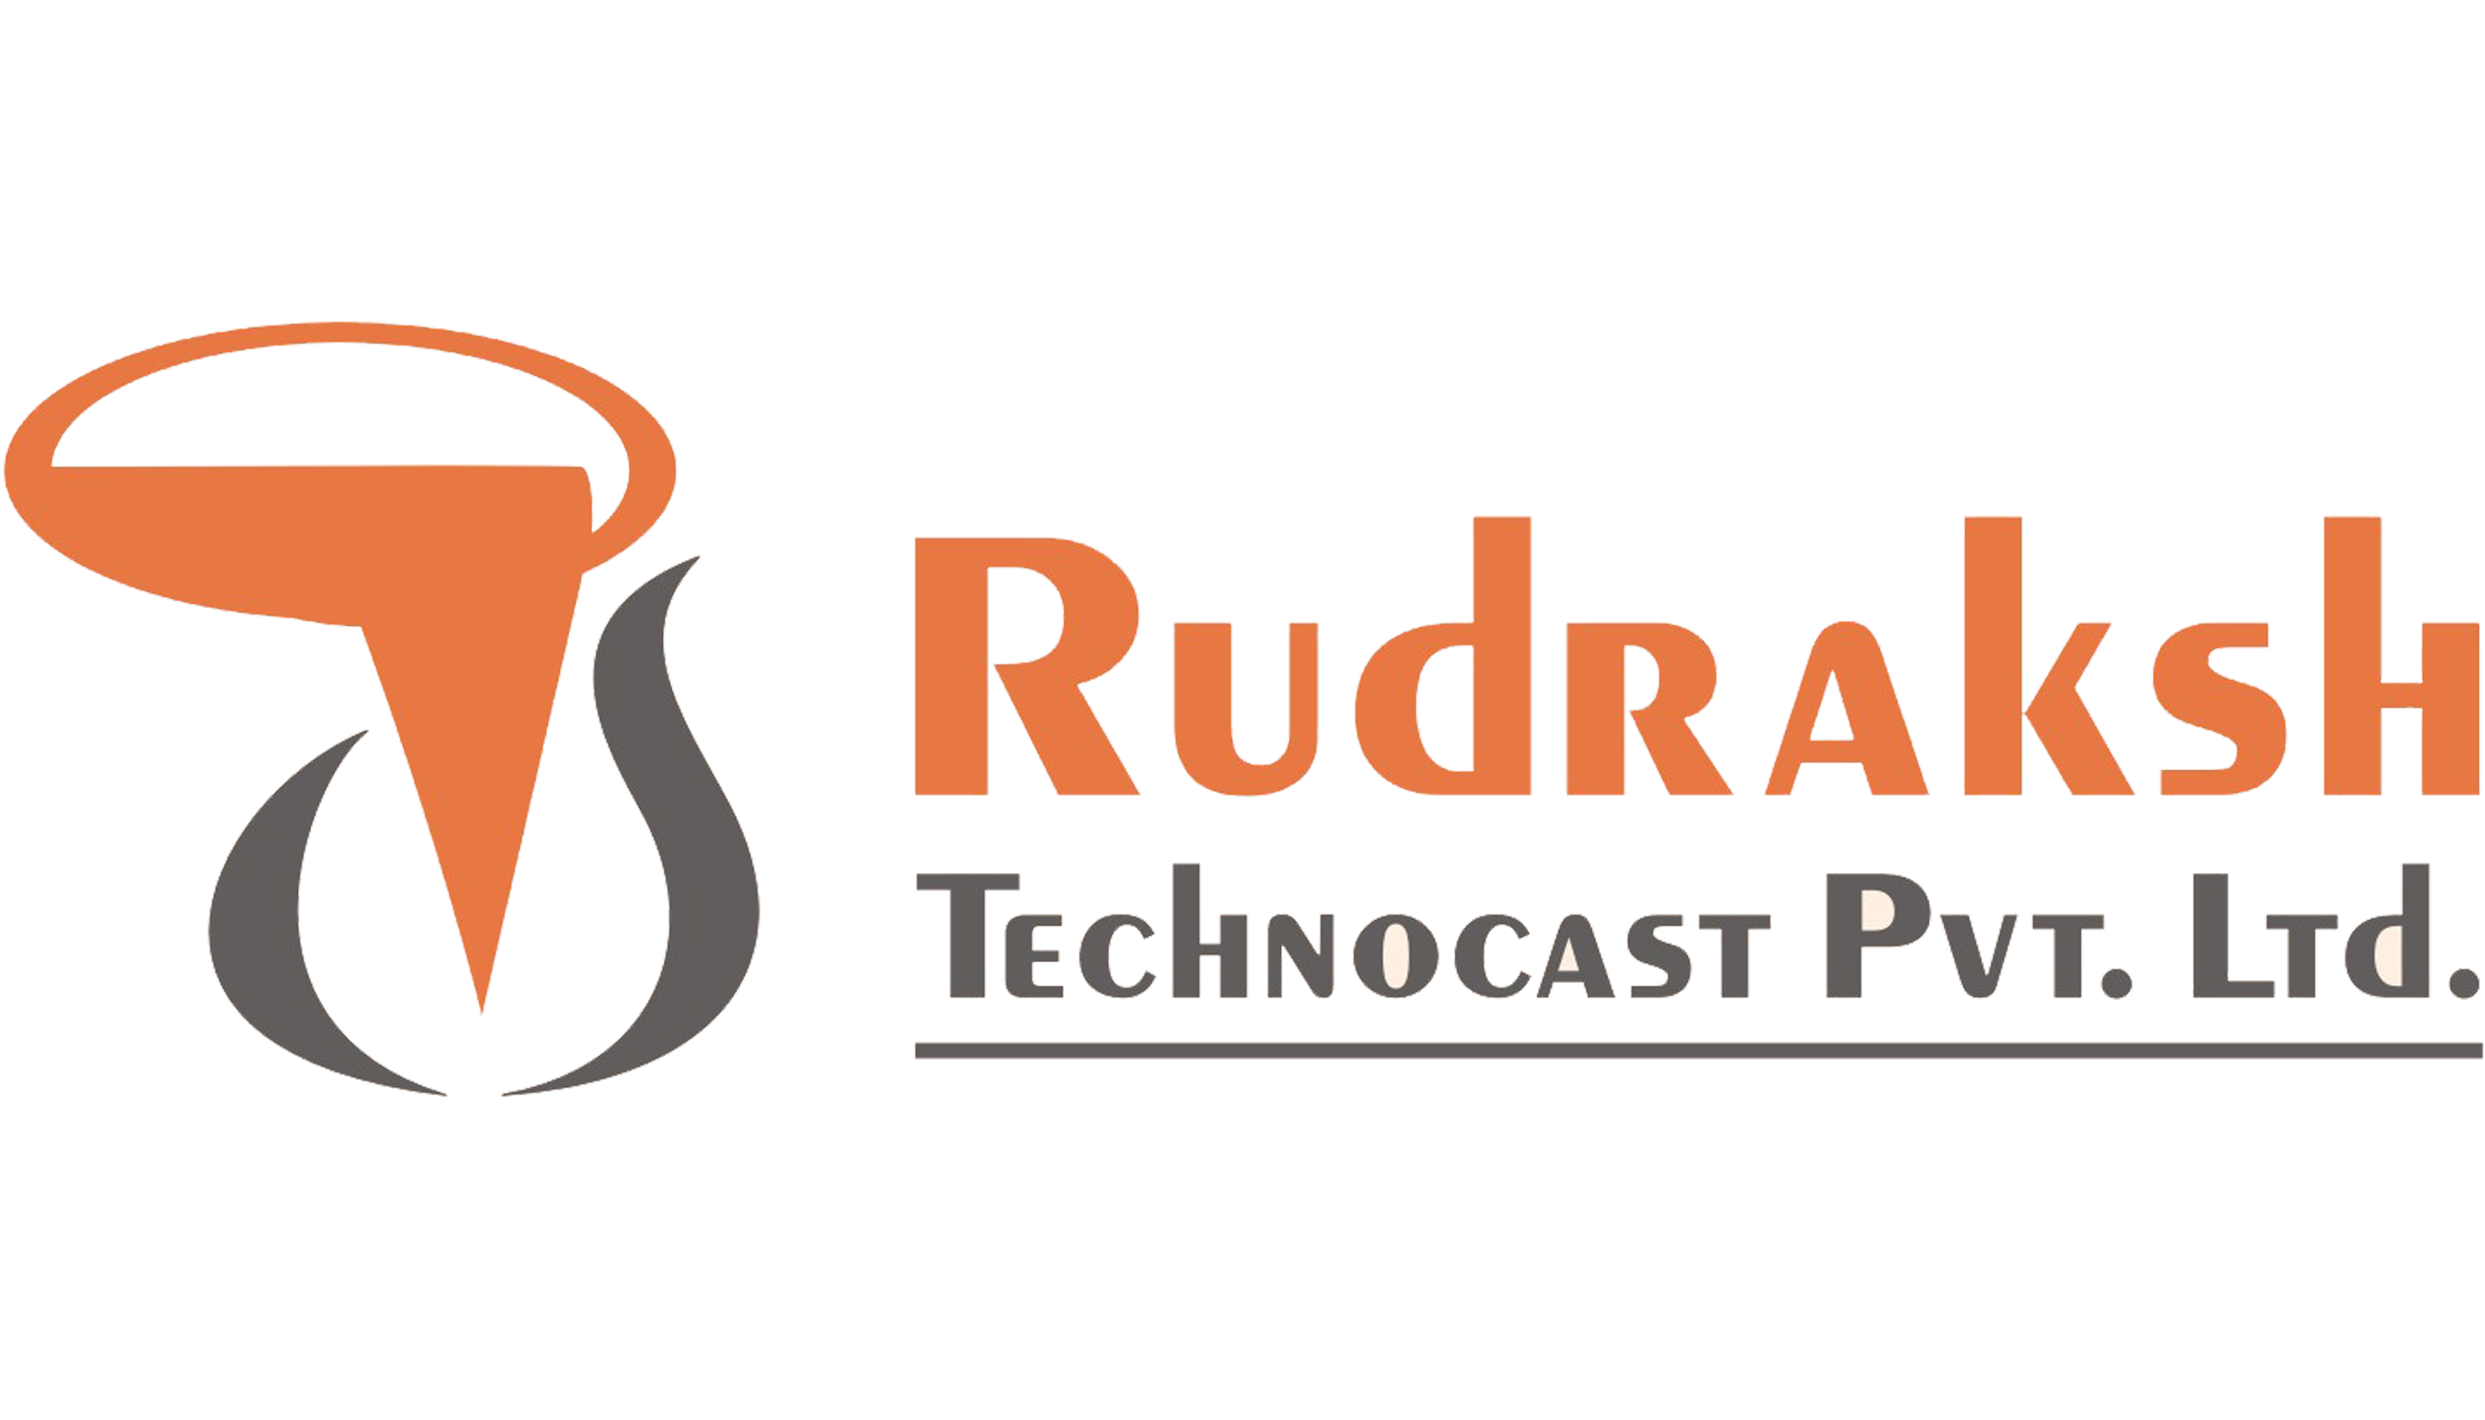 Rudraksh Technocast Pvt Ltd